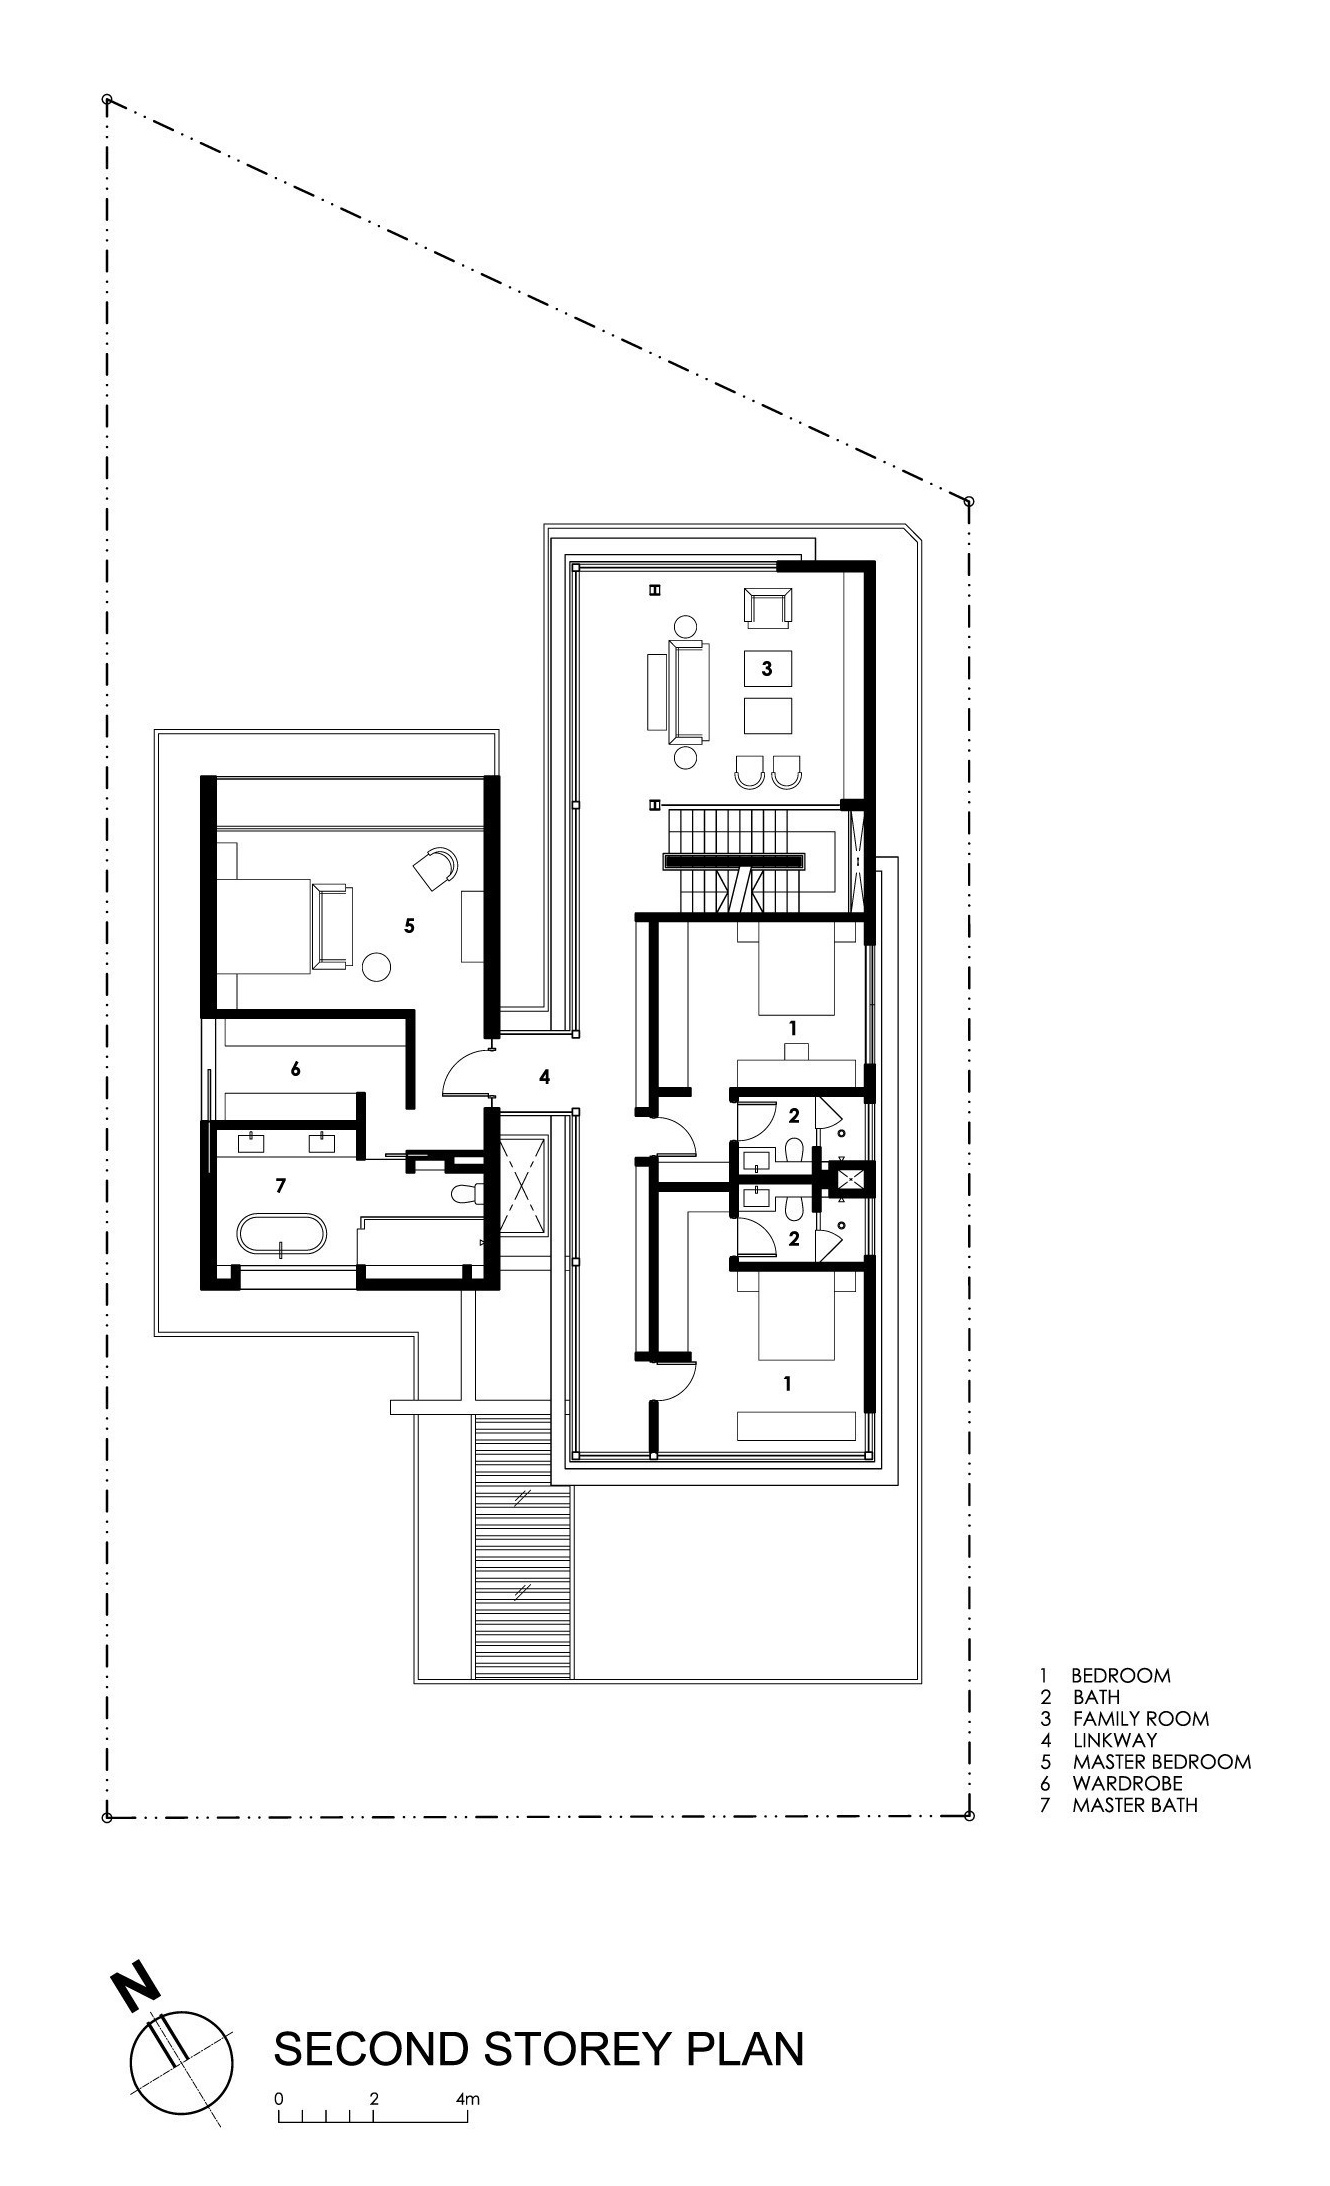 Second Floor Plan - Travertine Dream House Luxury Residence - Serangoon, Singapore